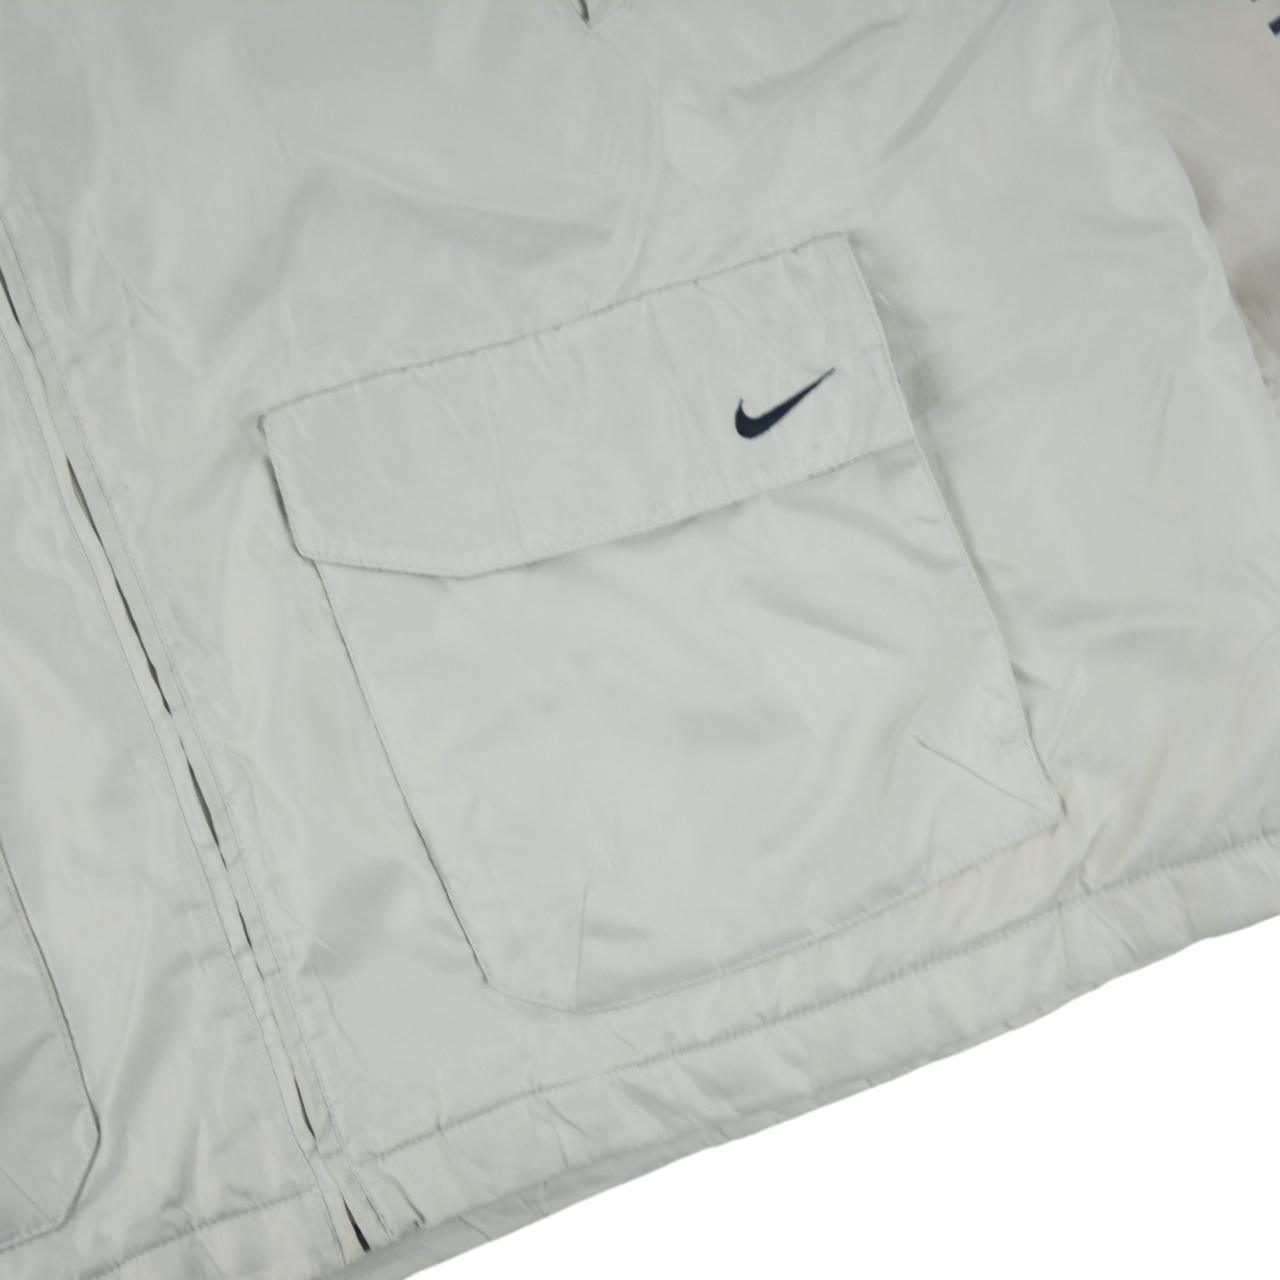 Vintage Nike Pocket Zip Up Jacket Size XL - Known Source